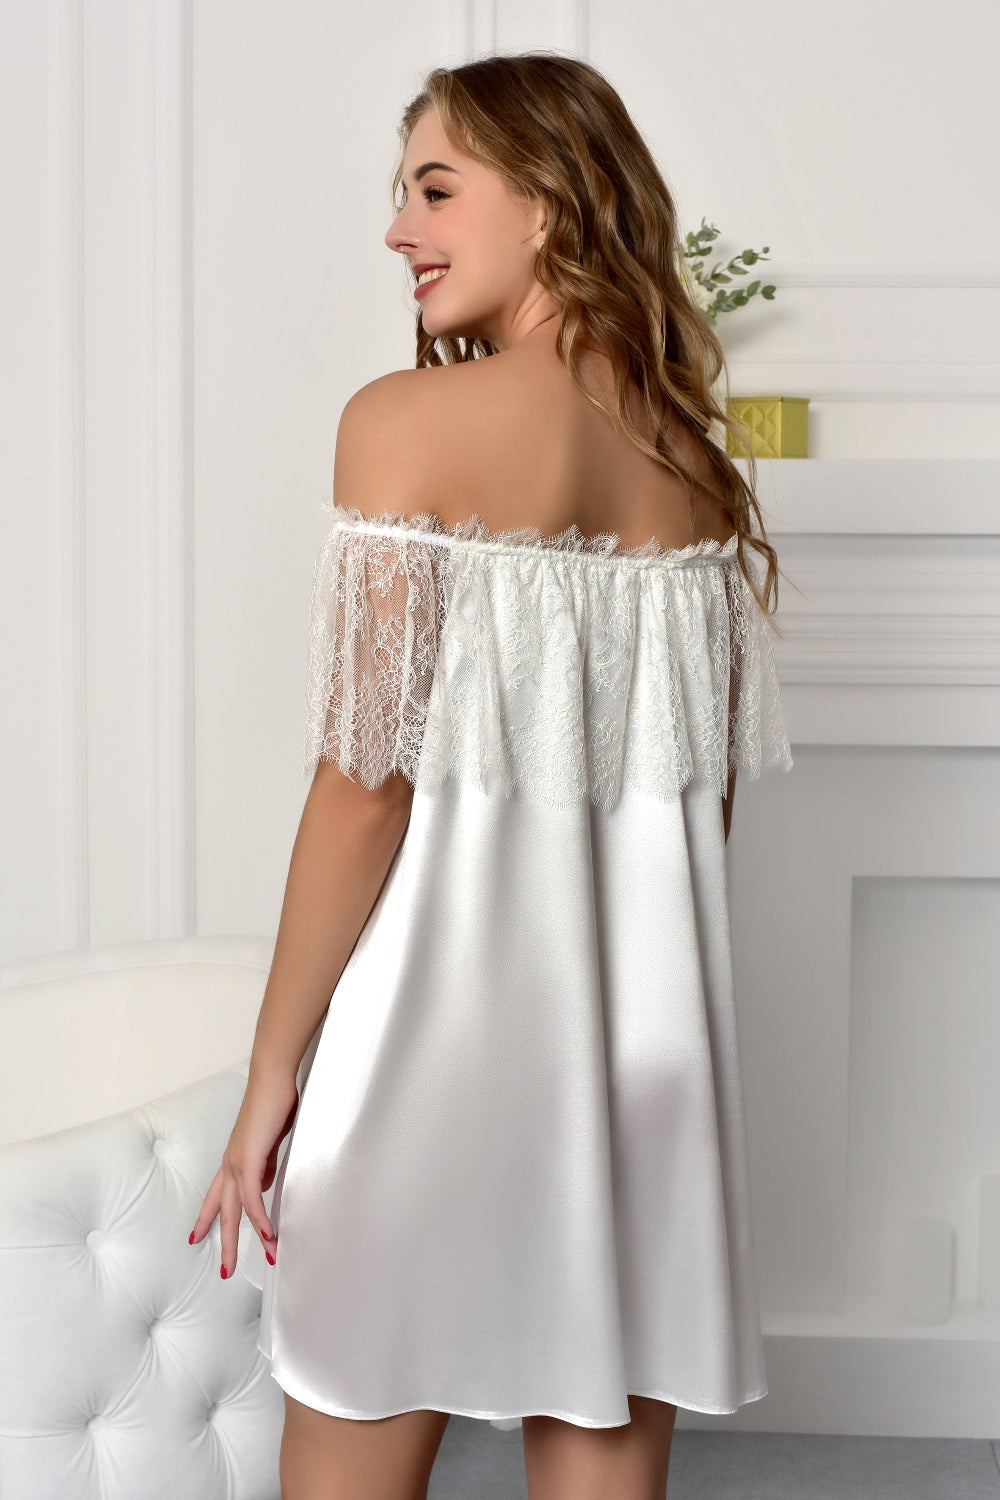 Bridal Peignoir - Off-Shoulder Ivory Nightgown